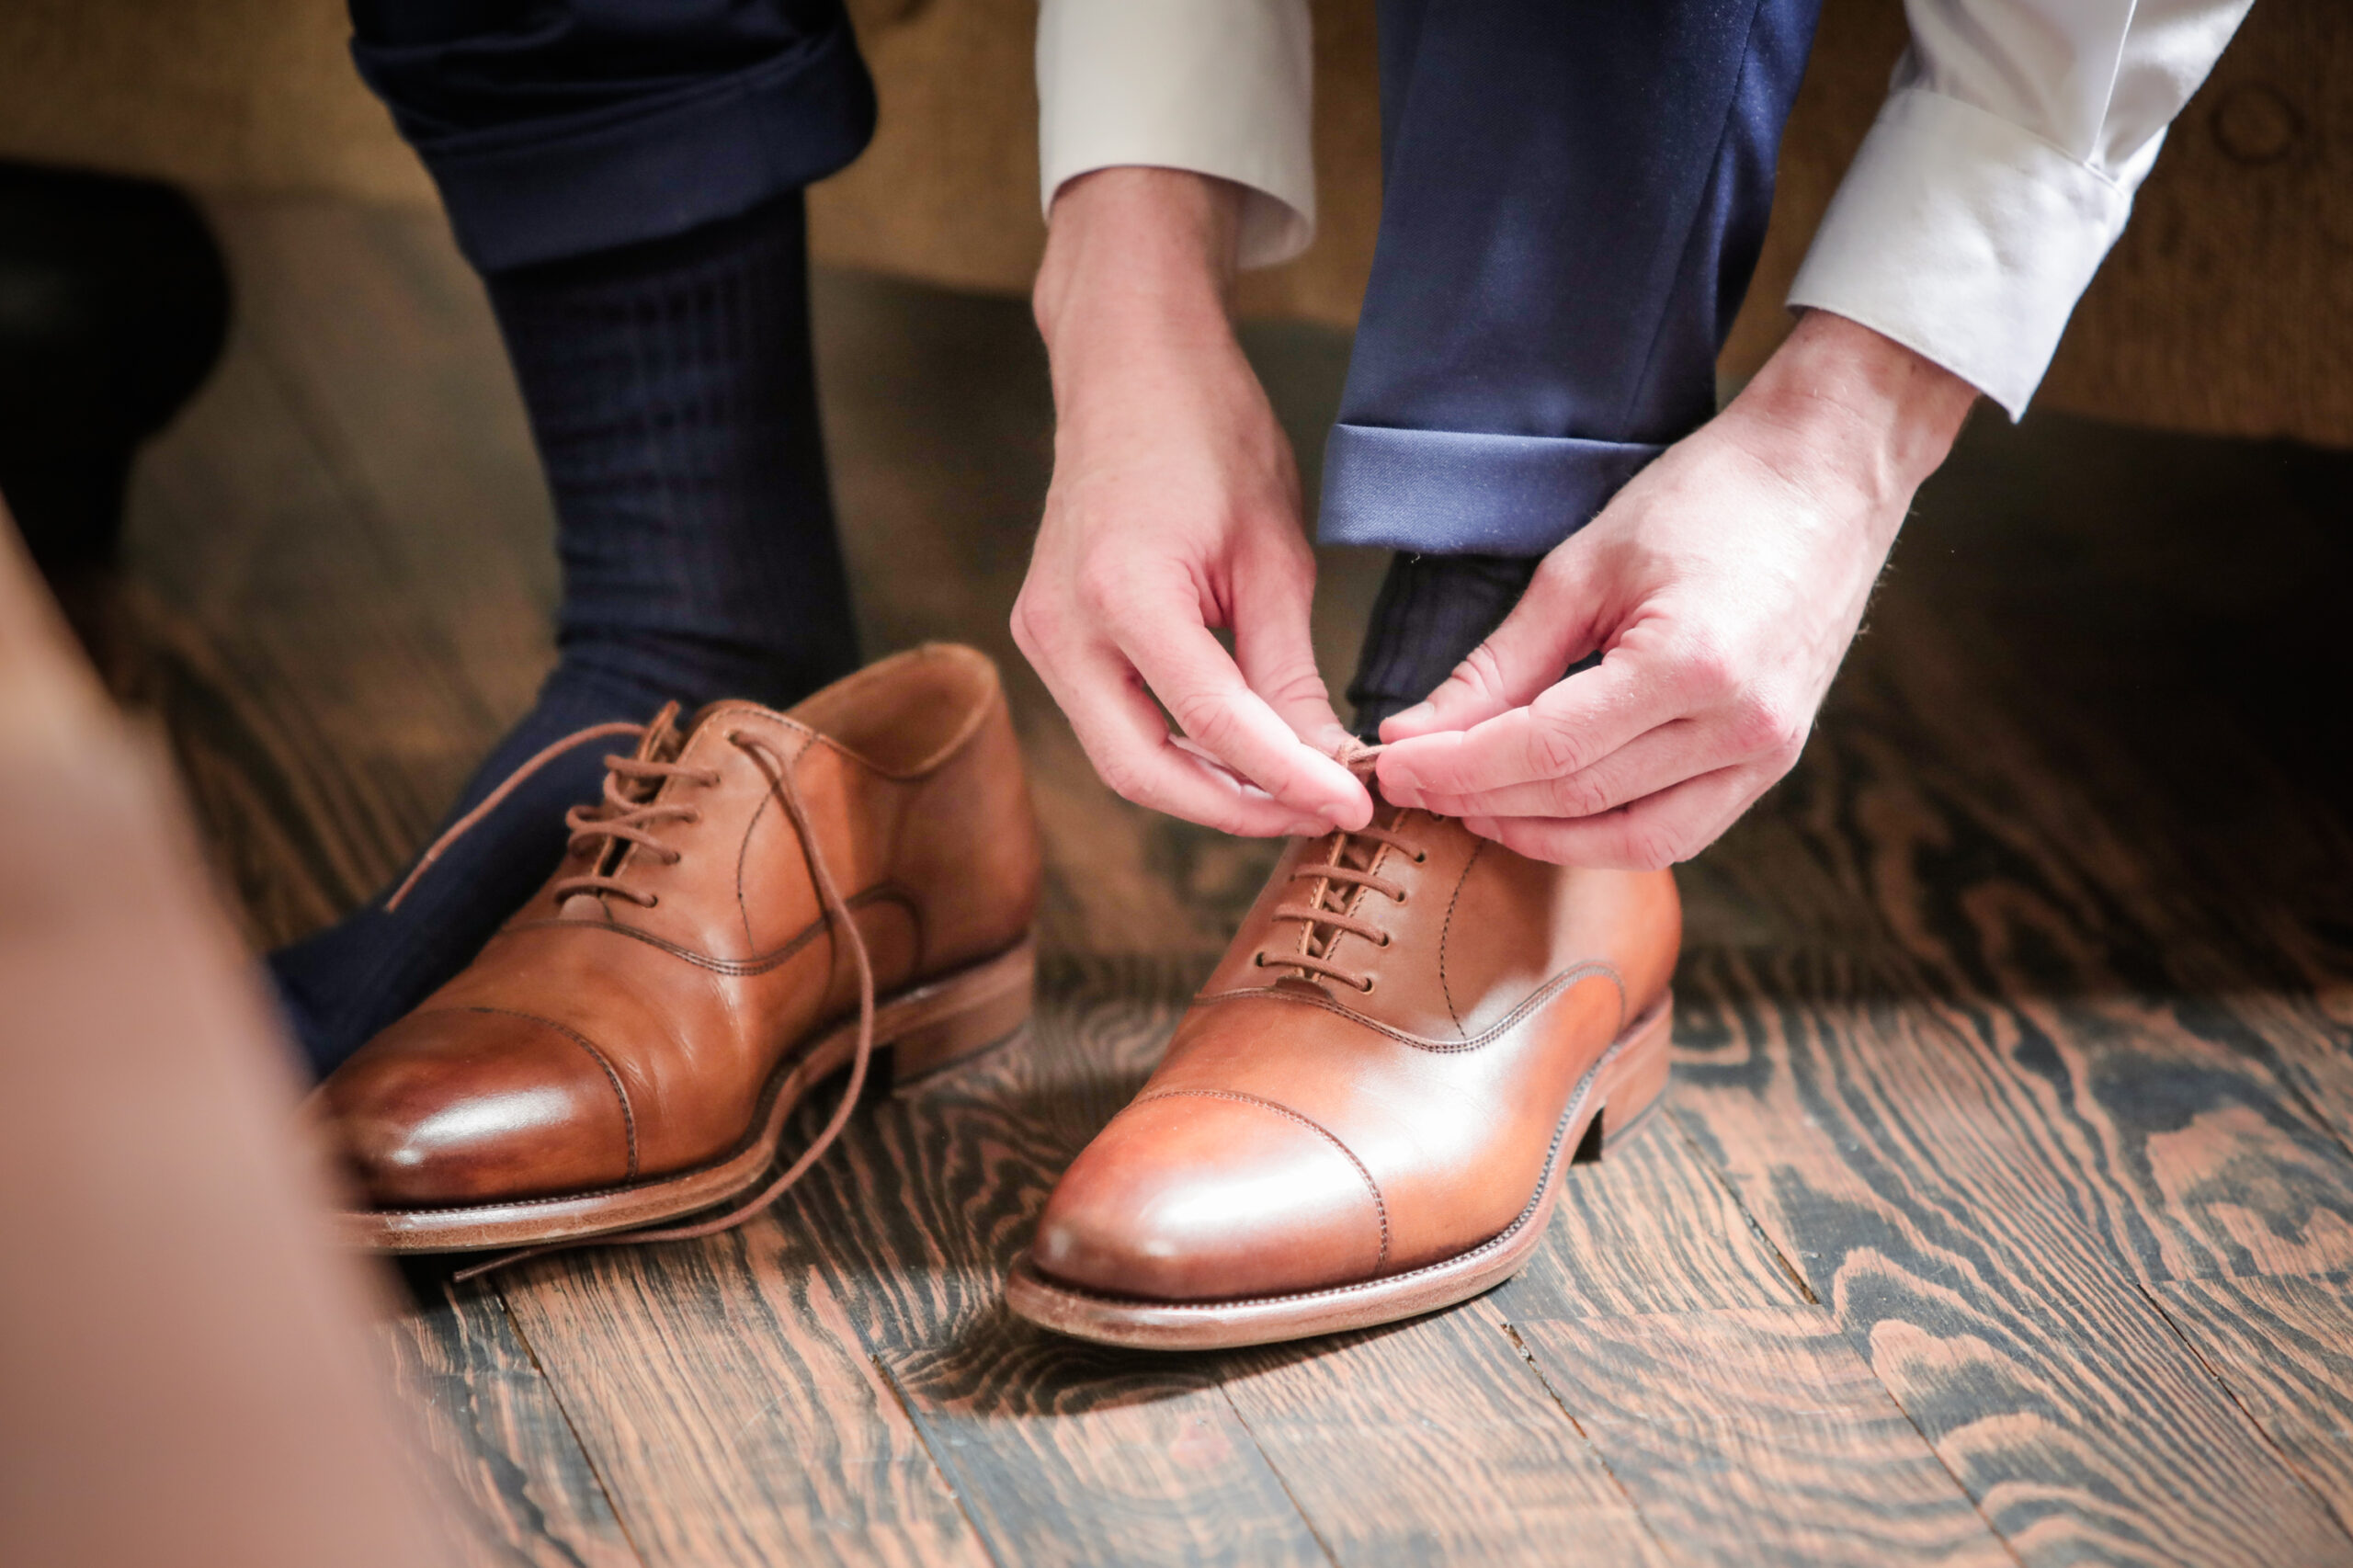 Choisir vos chaussures de mariage pour hommes - D Day Wedding Planner -  Organisation de Mariage